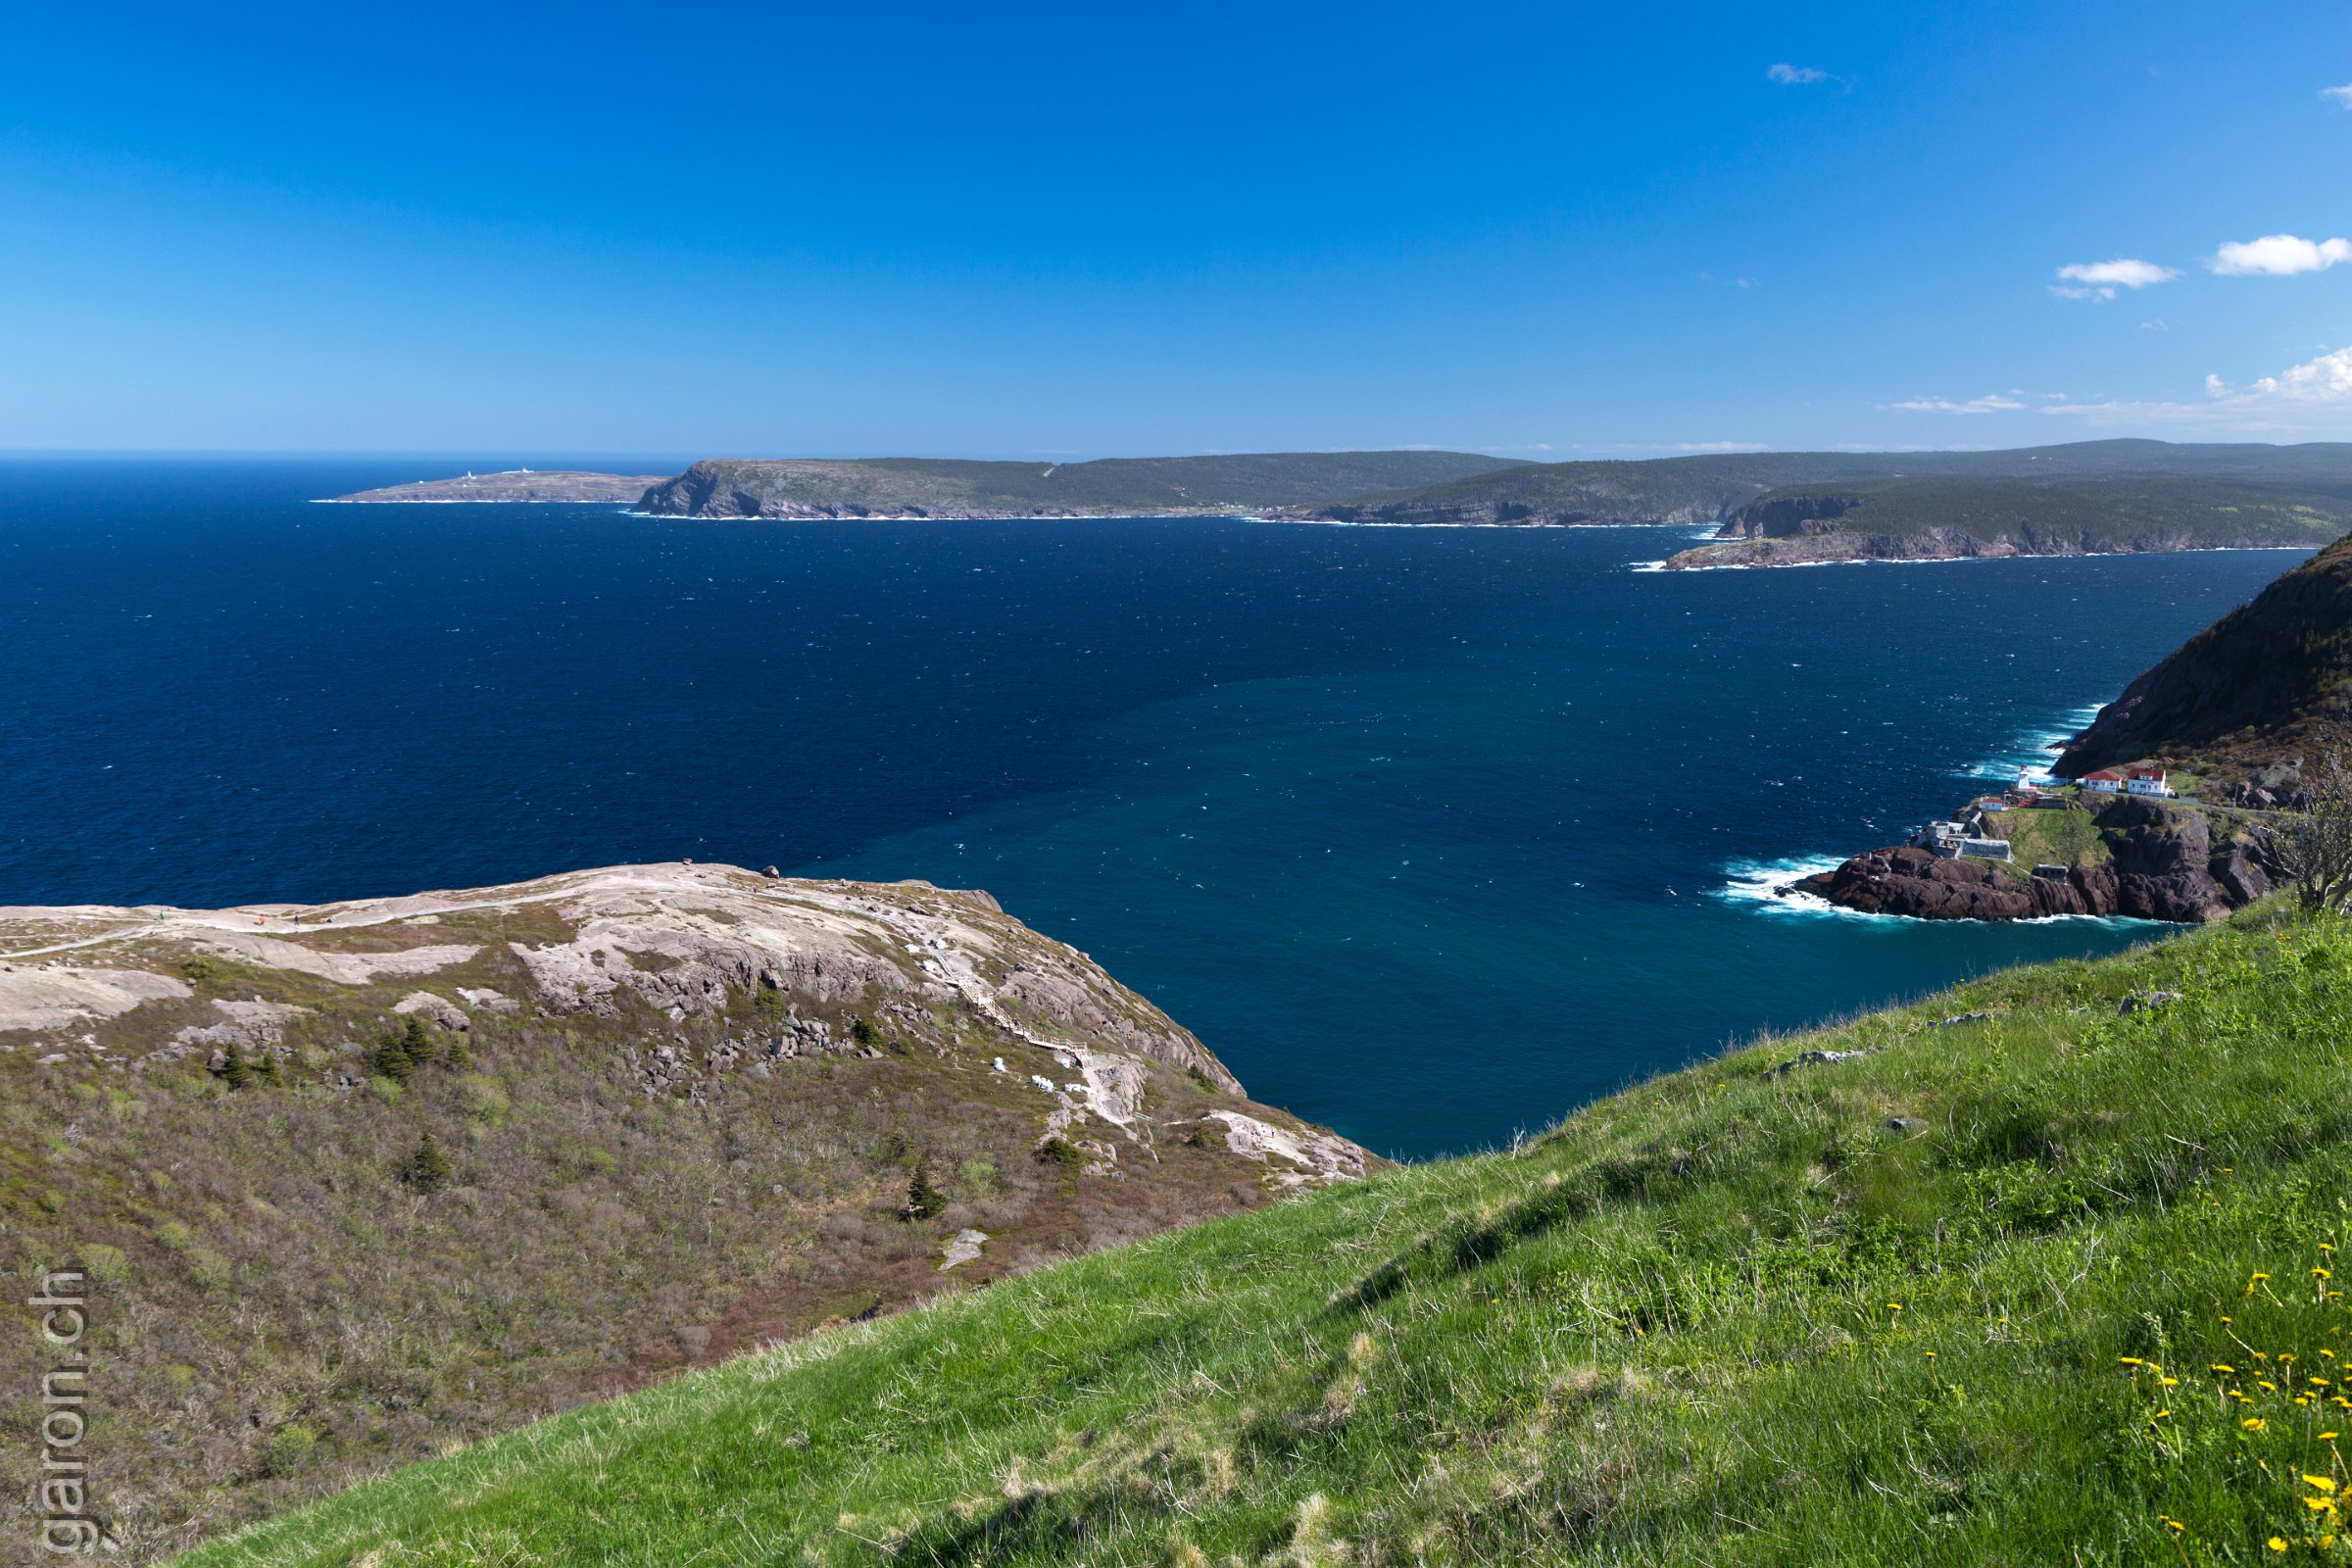 Newfoundland, St John's Fort Amherst and Black Head coast